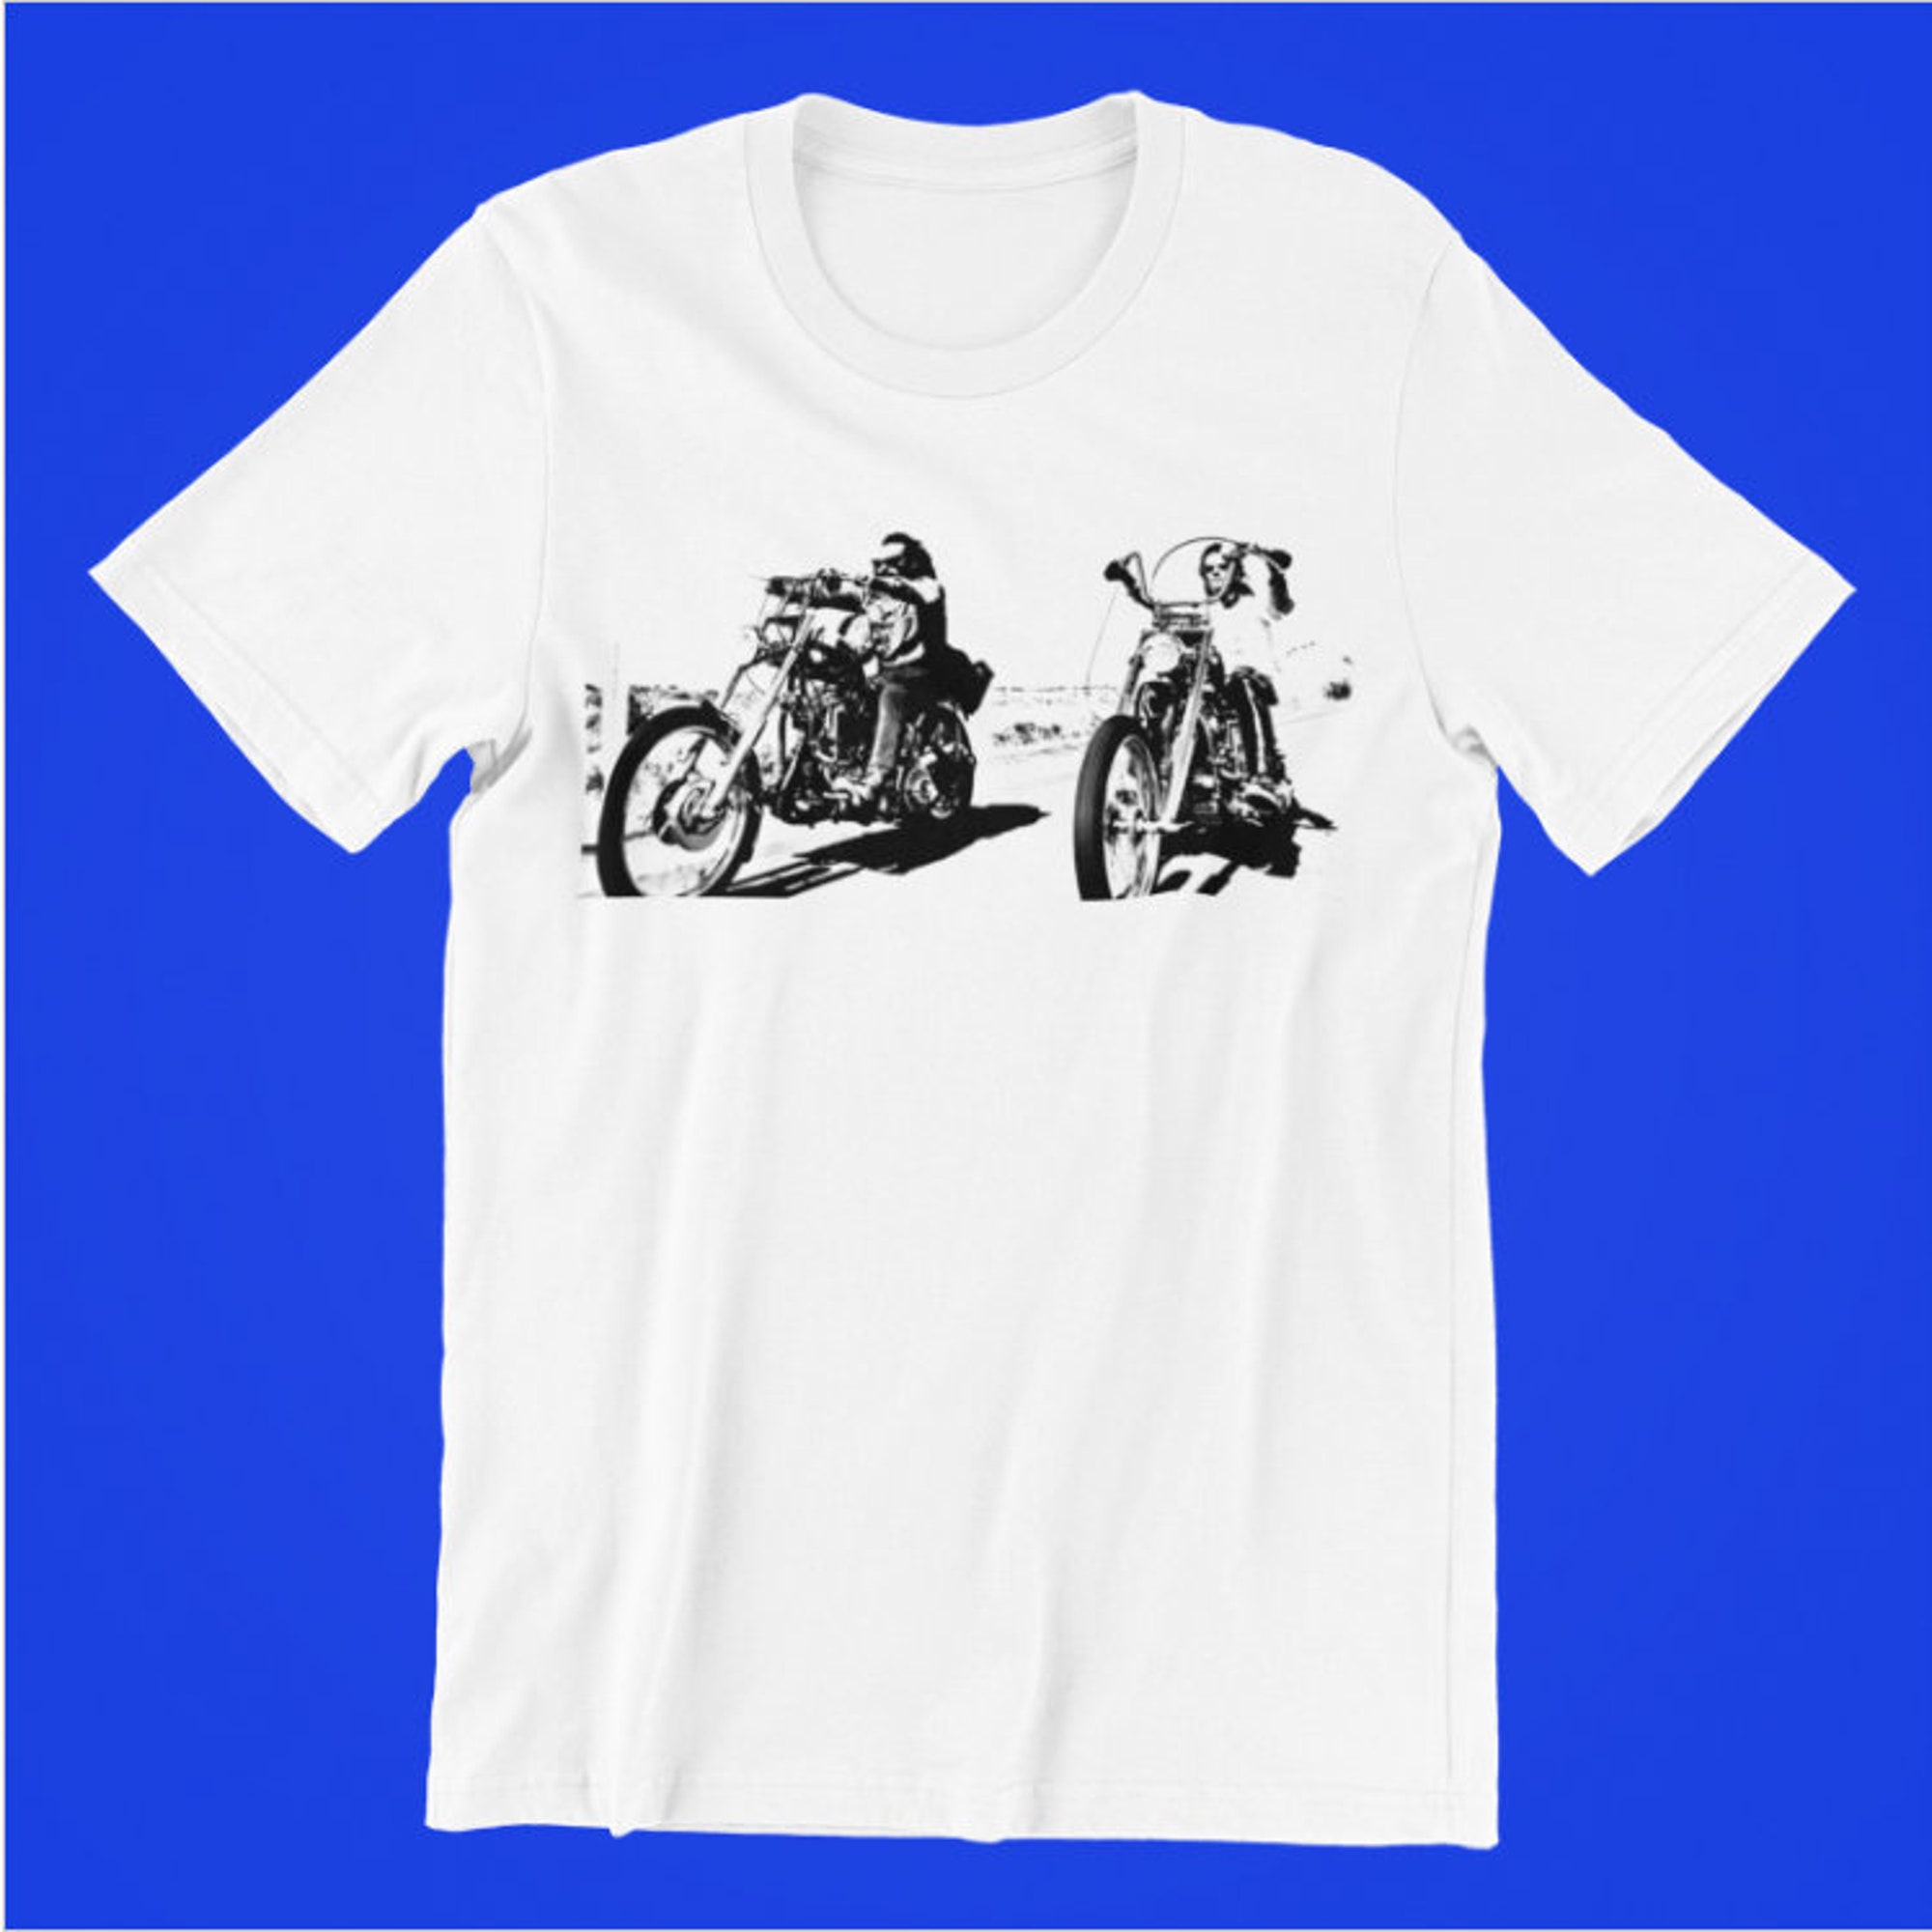 Easy Rider T-Shirt